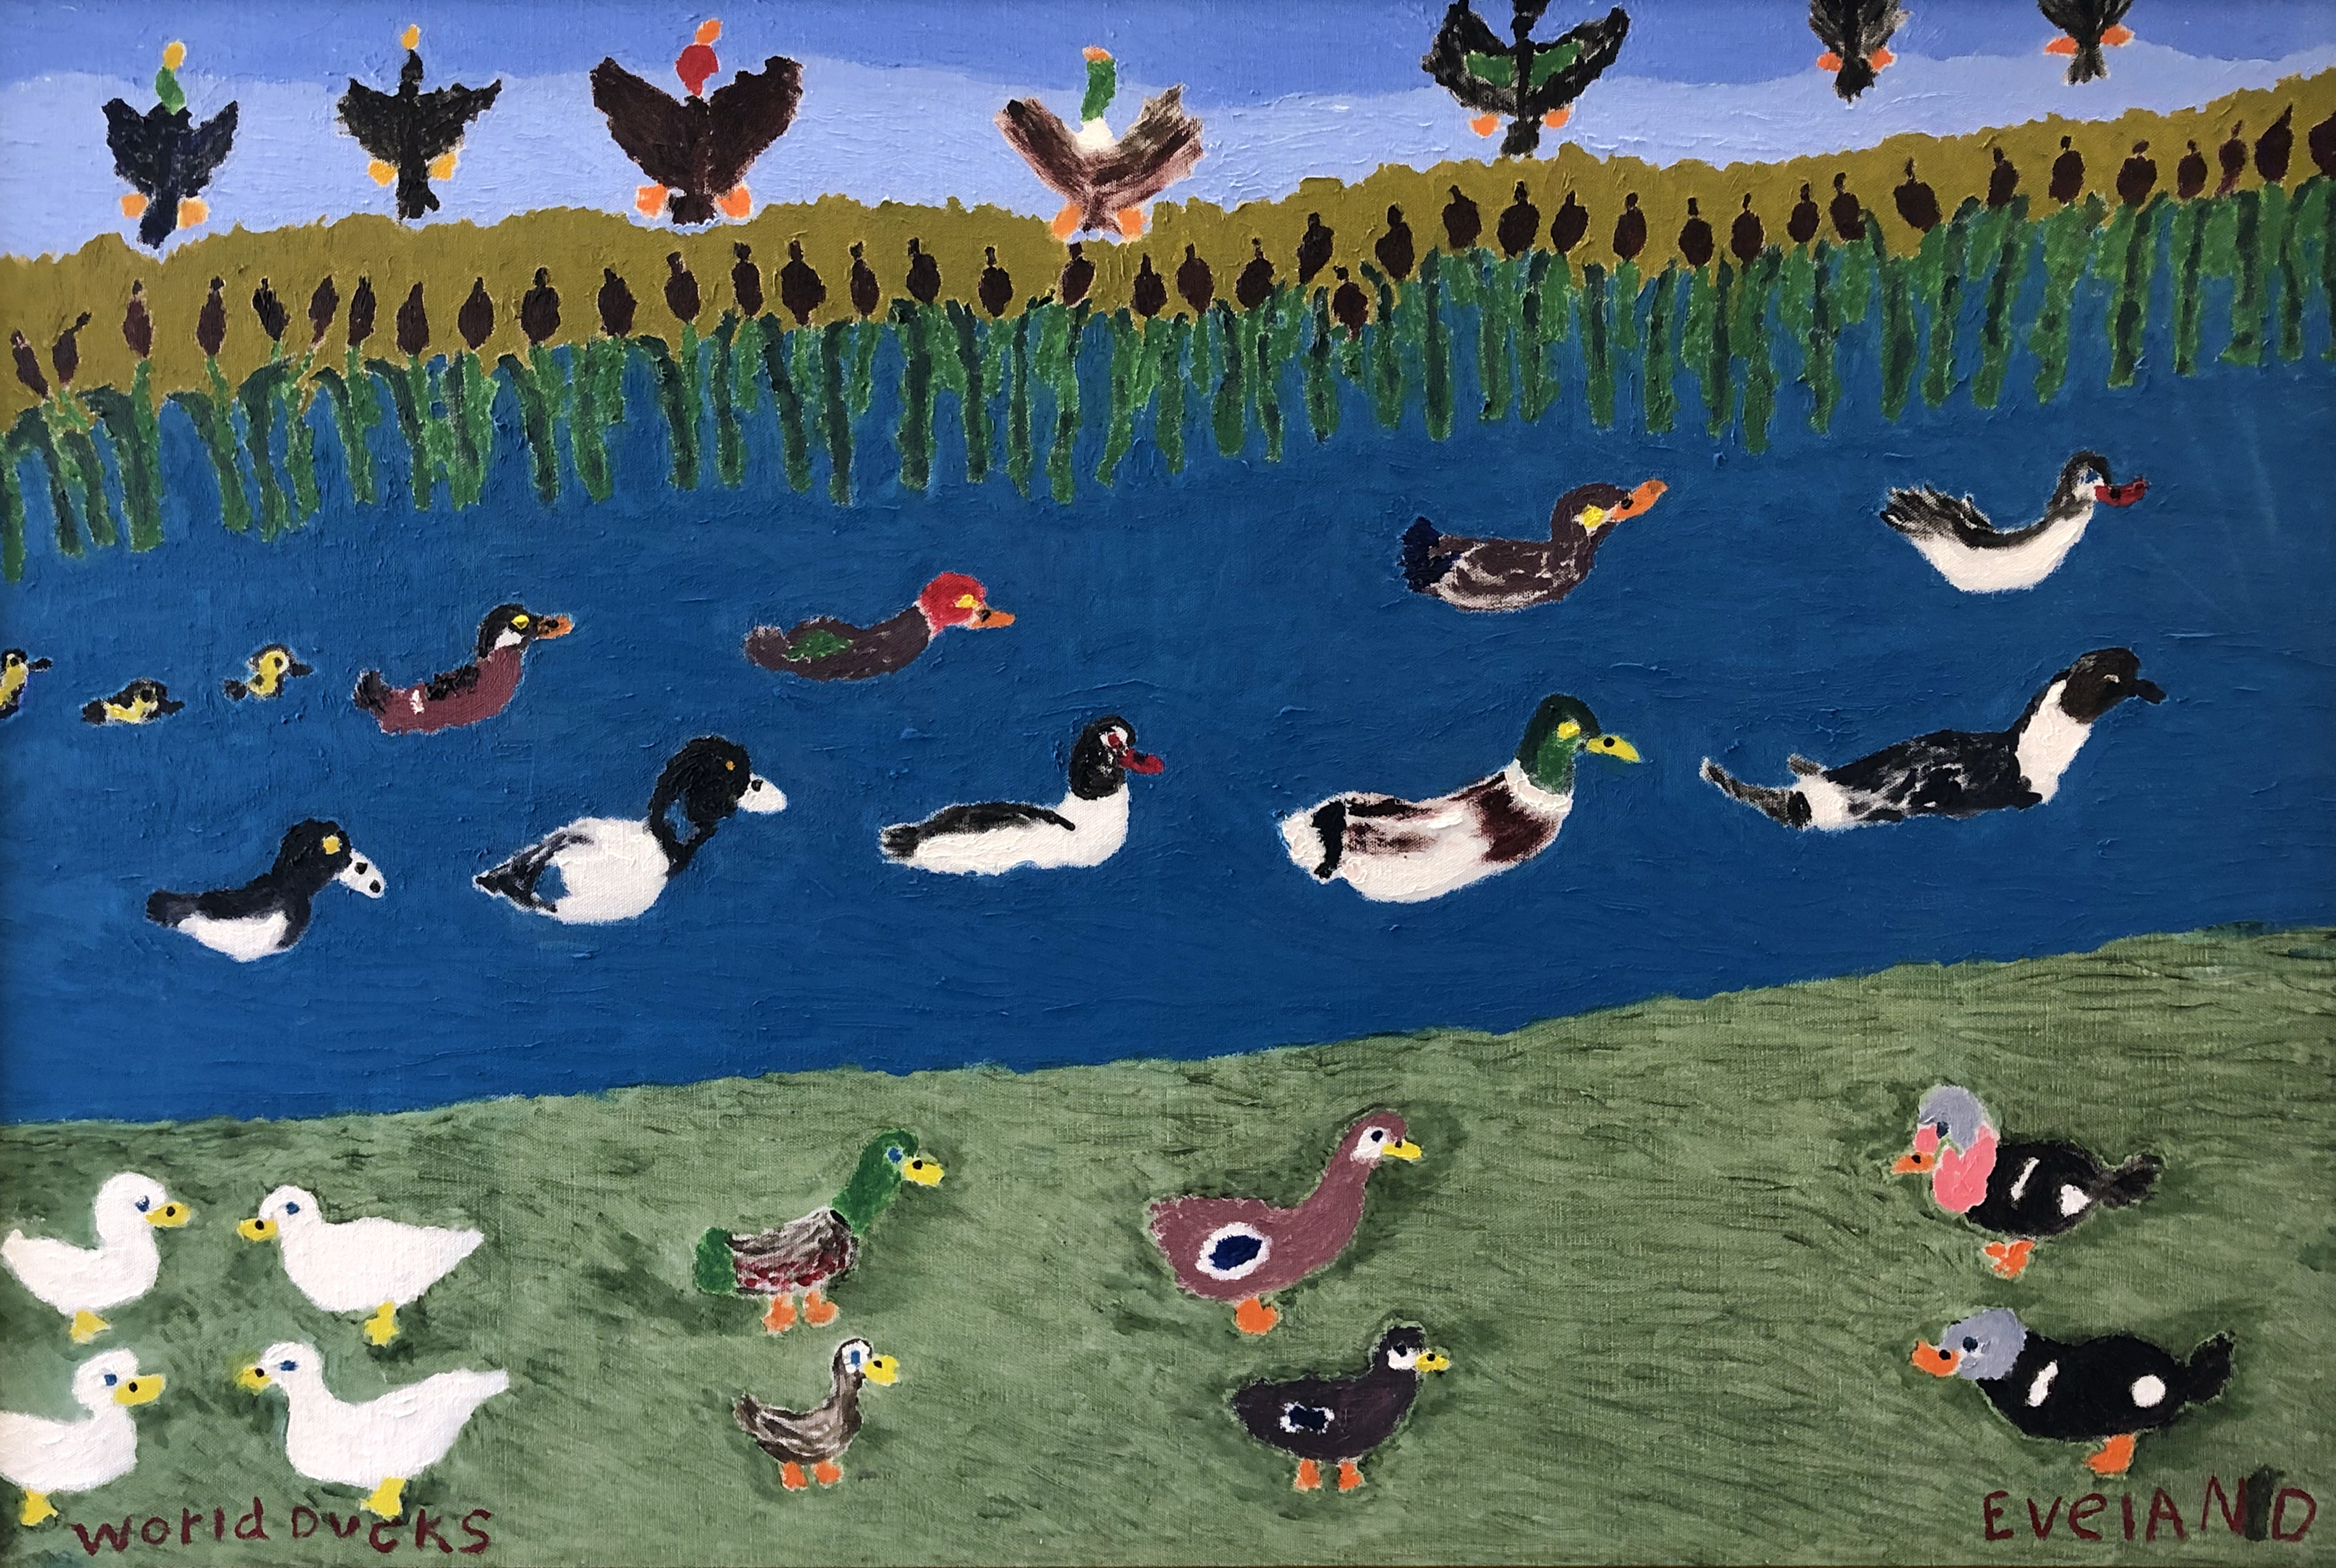 World Ducks by Mary Sophia Eveland